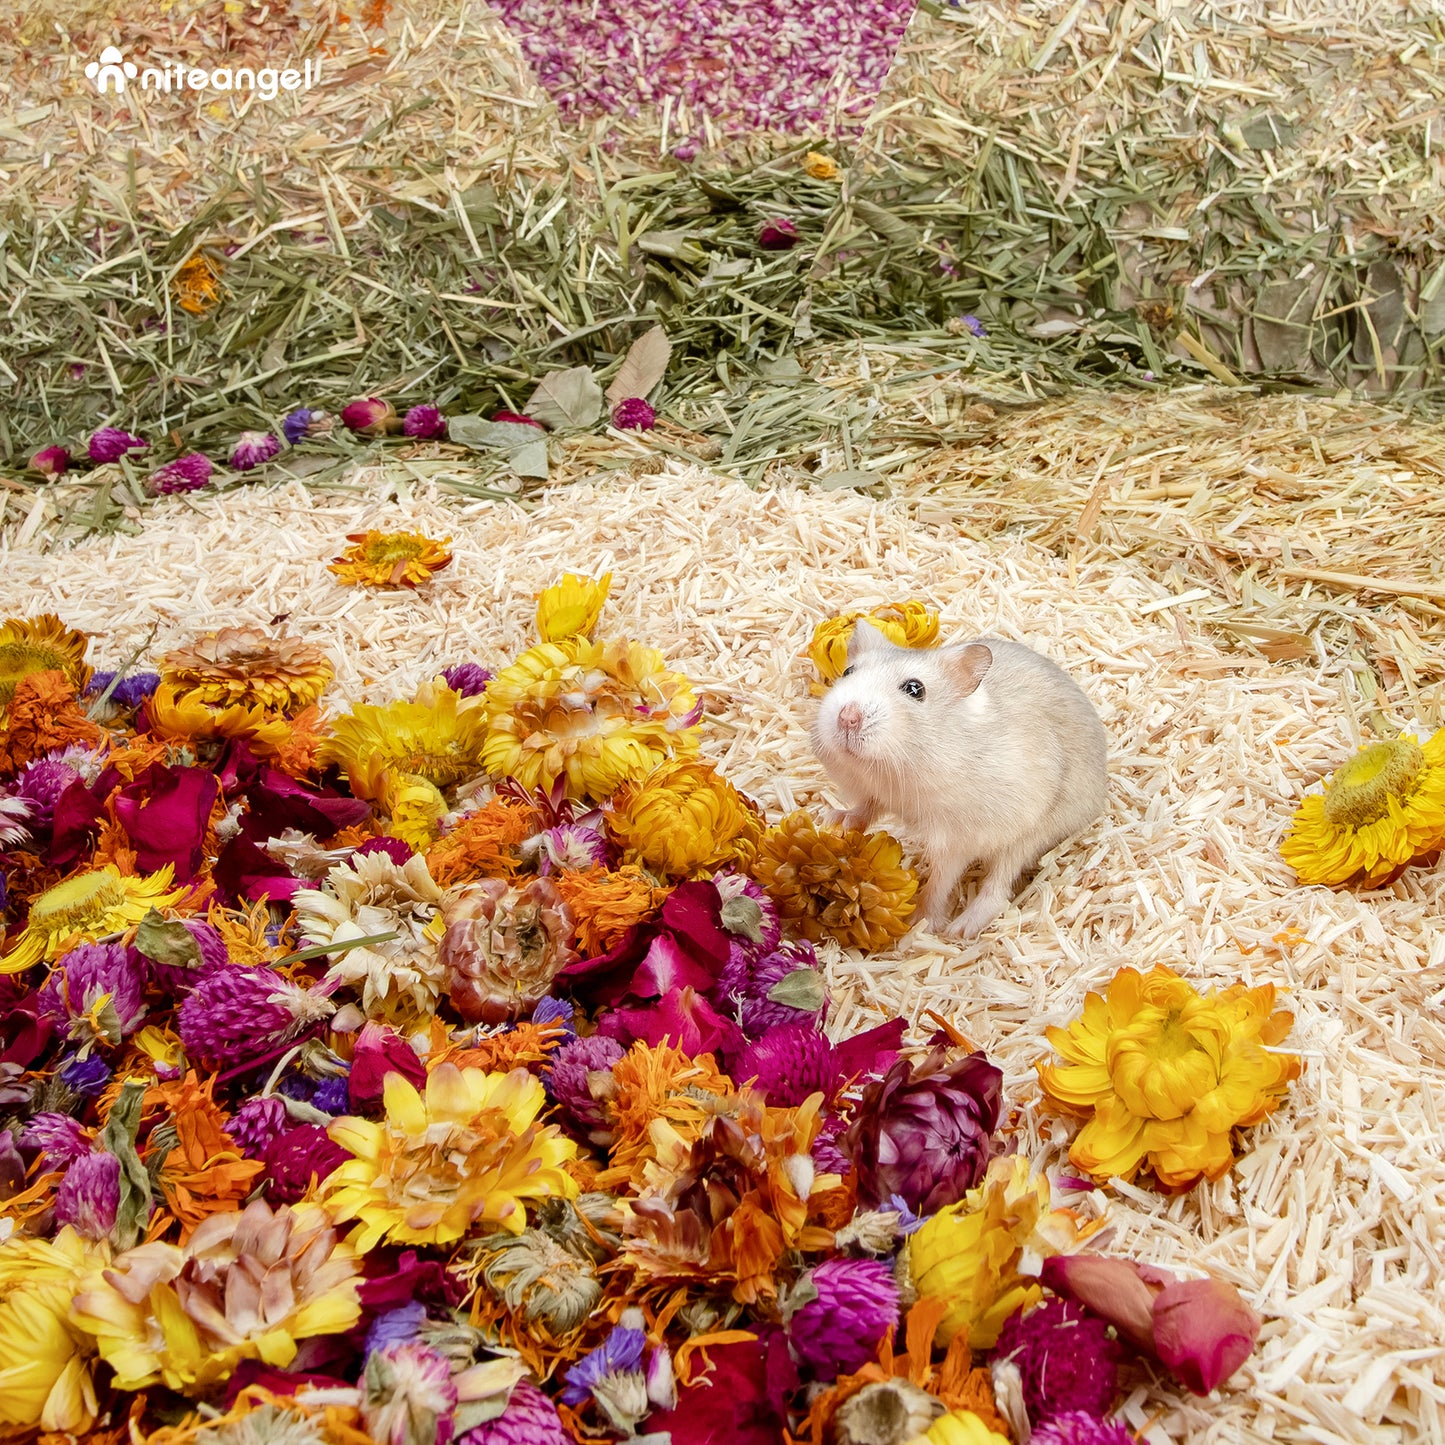 Niteangel Natural & Soft Hamster Bedding Mate Small Animal Habitat Decor for Syrian Dwarf Hamsters Gerbi